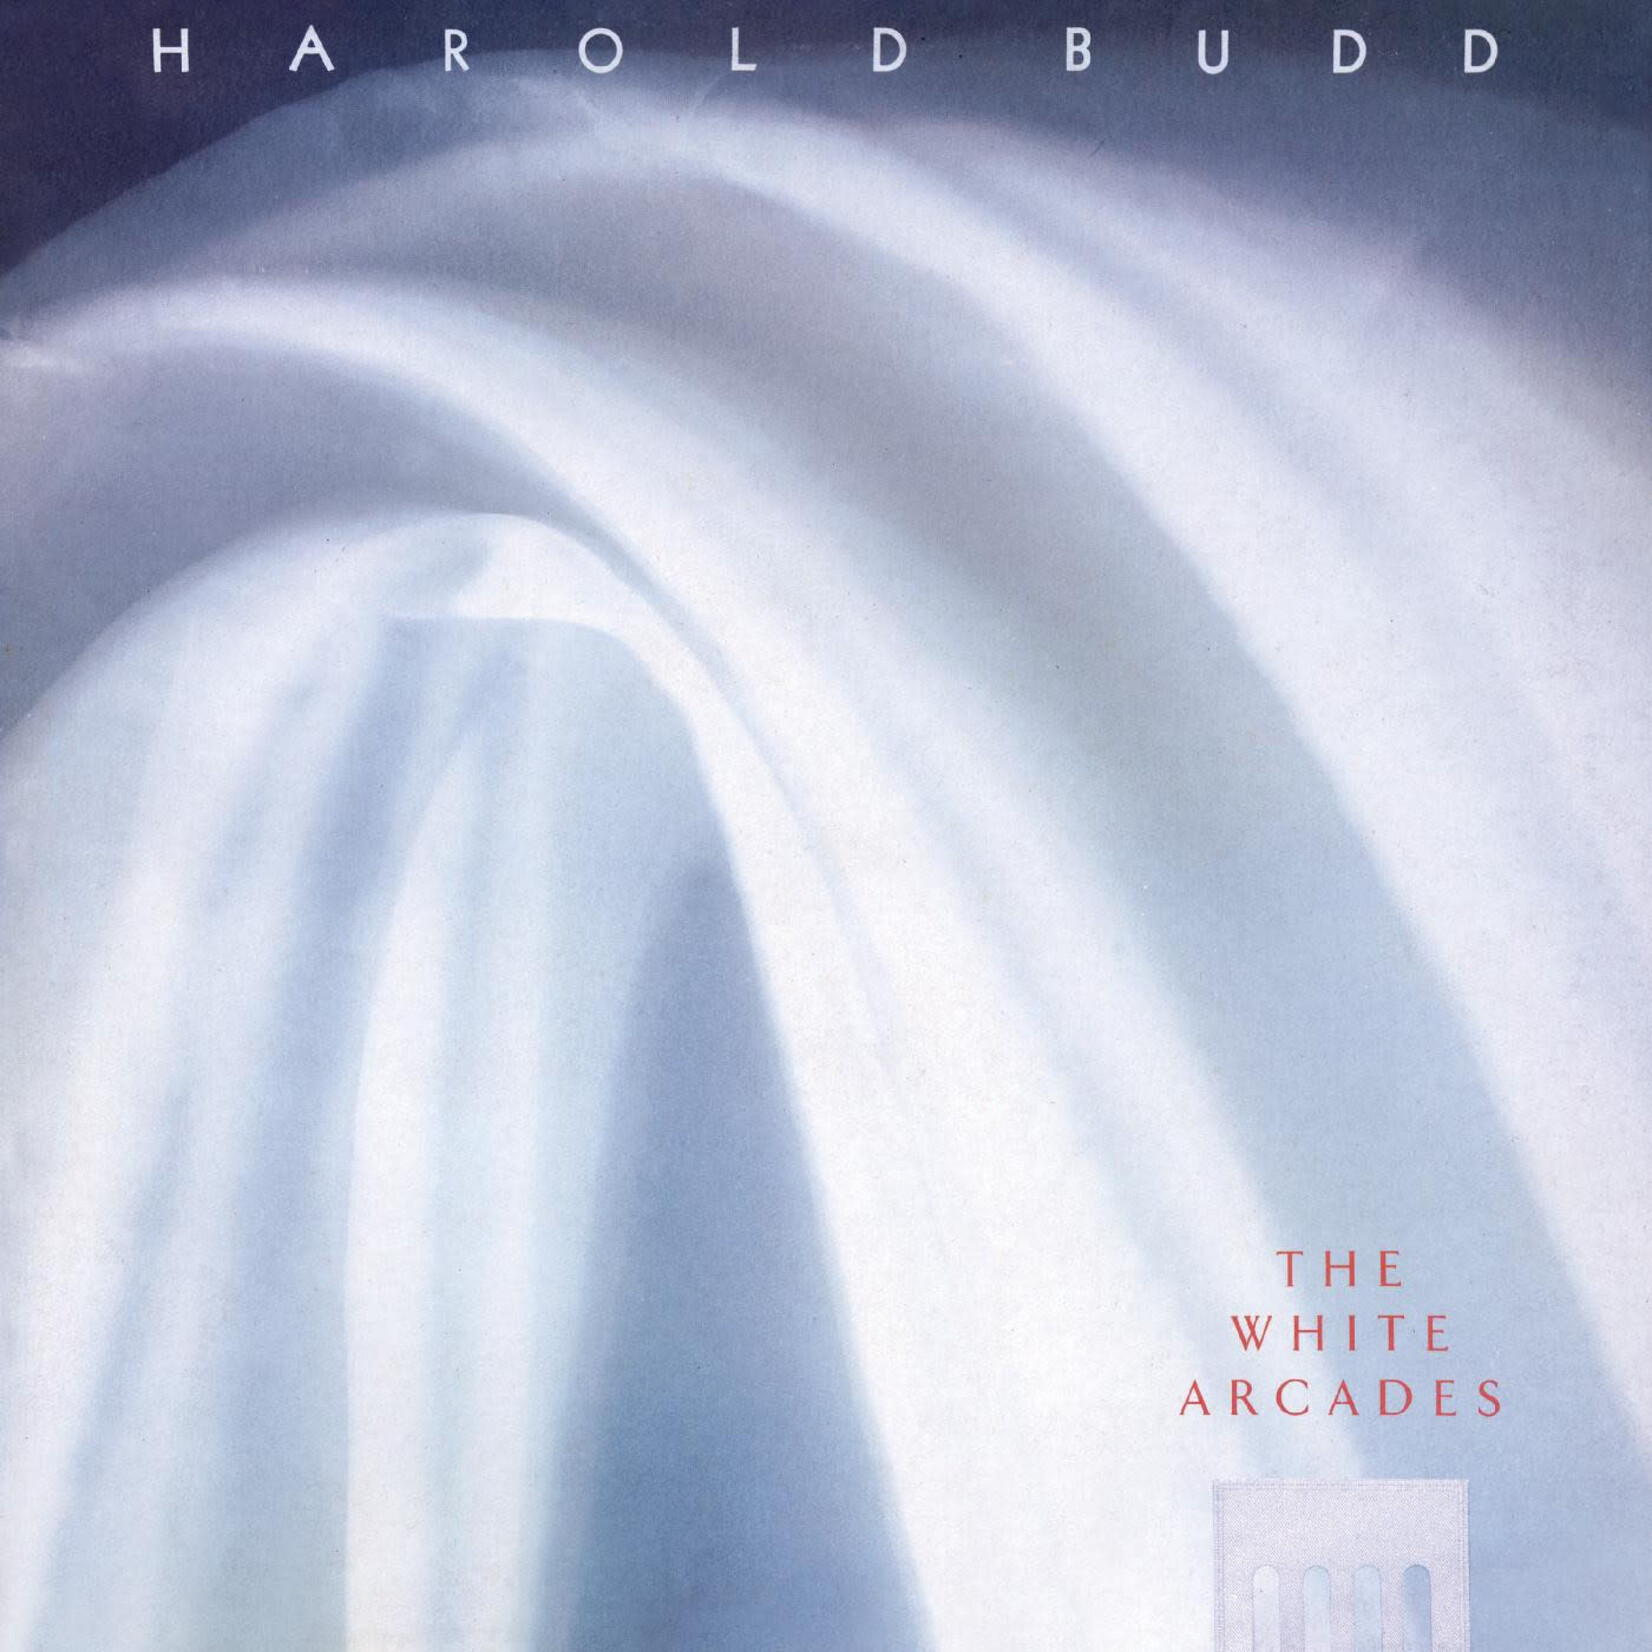 All Saints Harold Budd - The White Arcades (LP) [Clear]